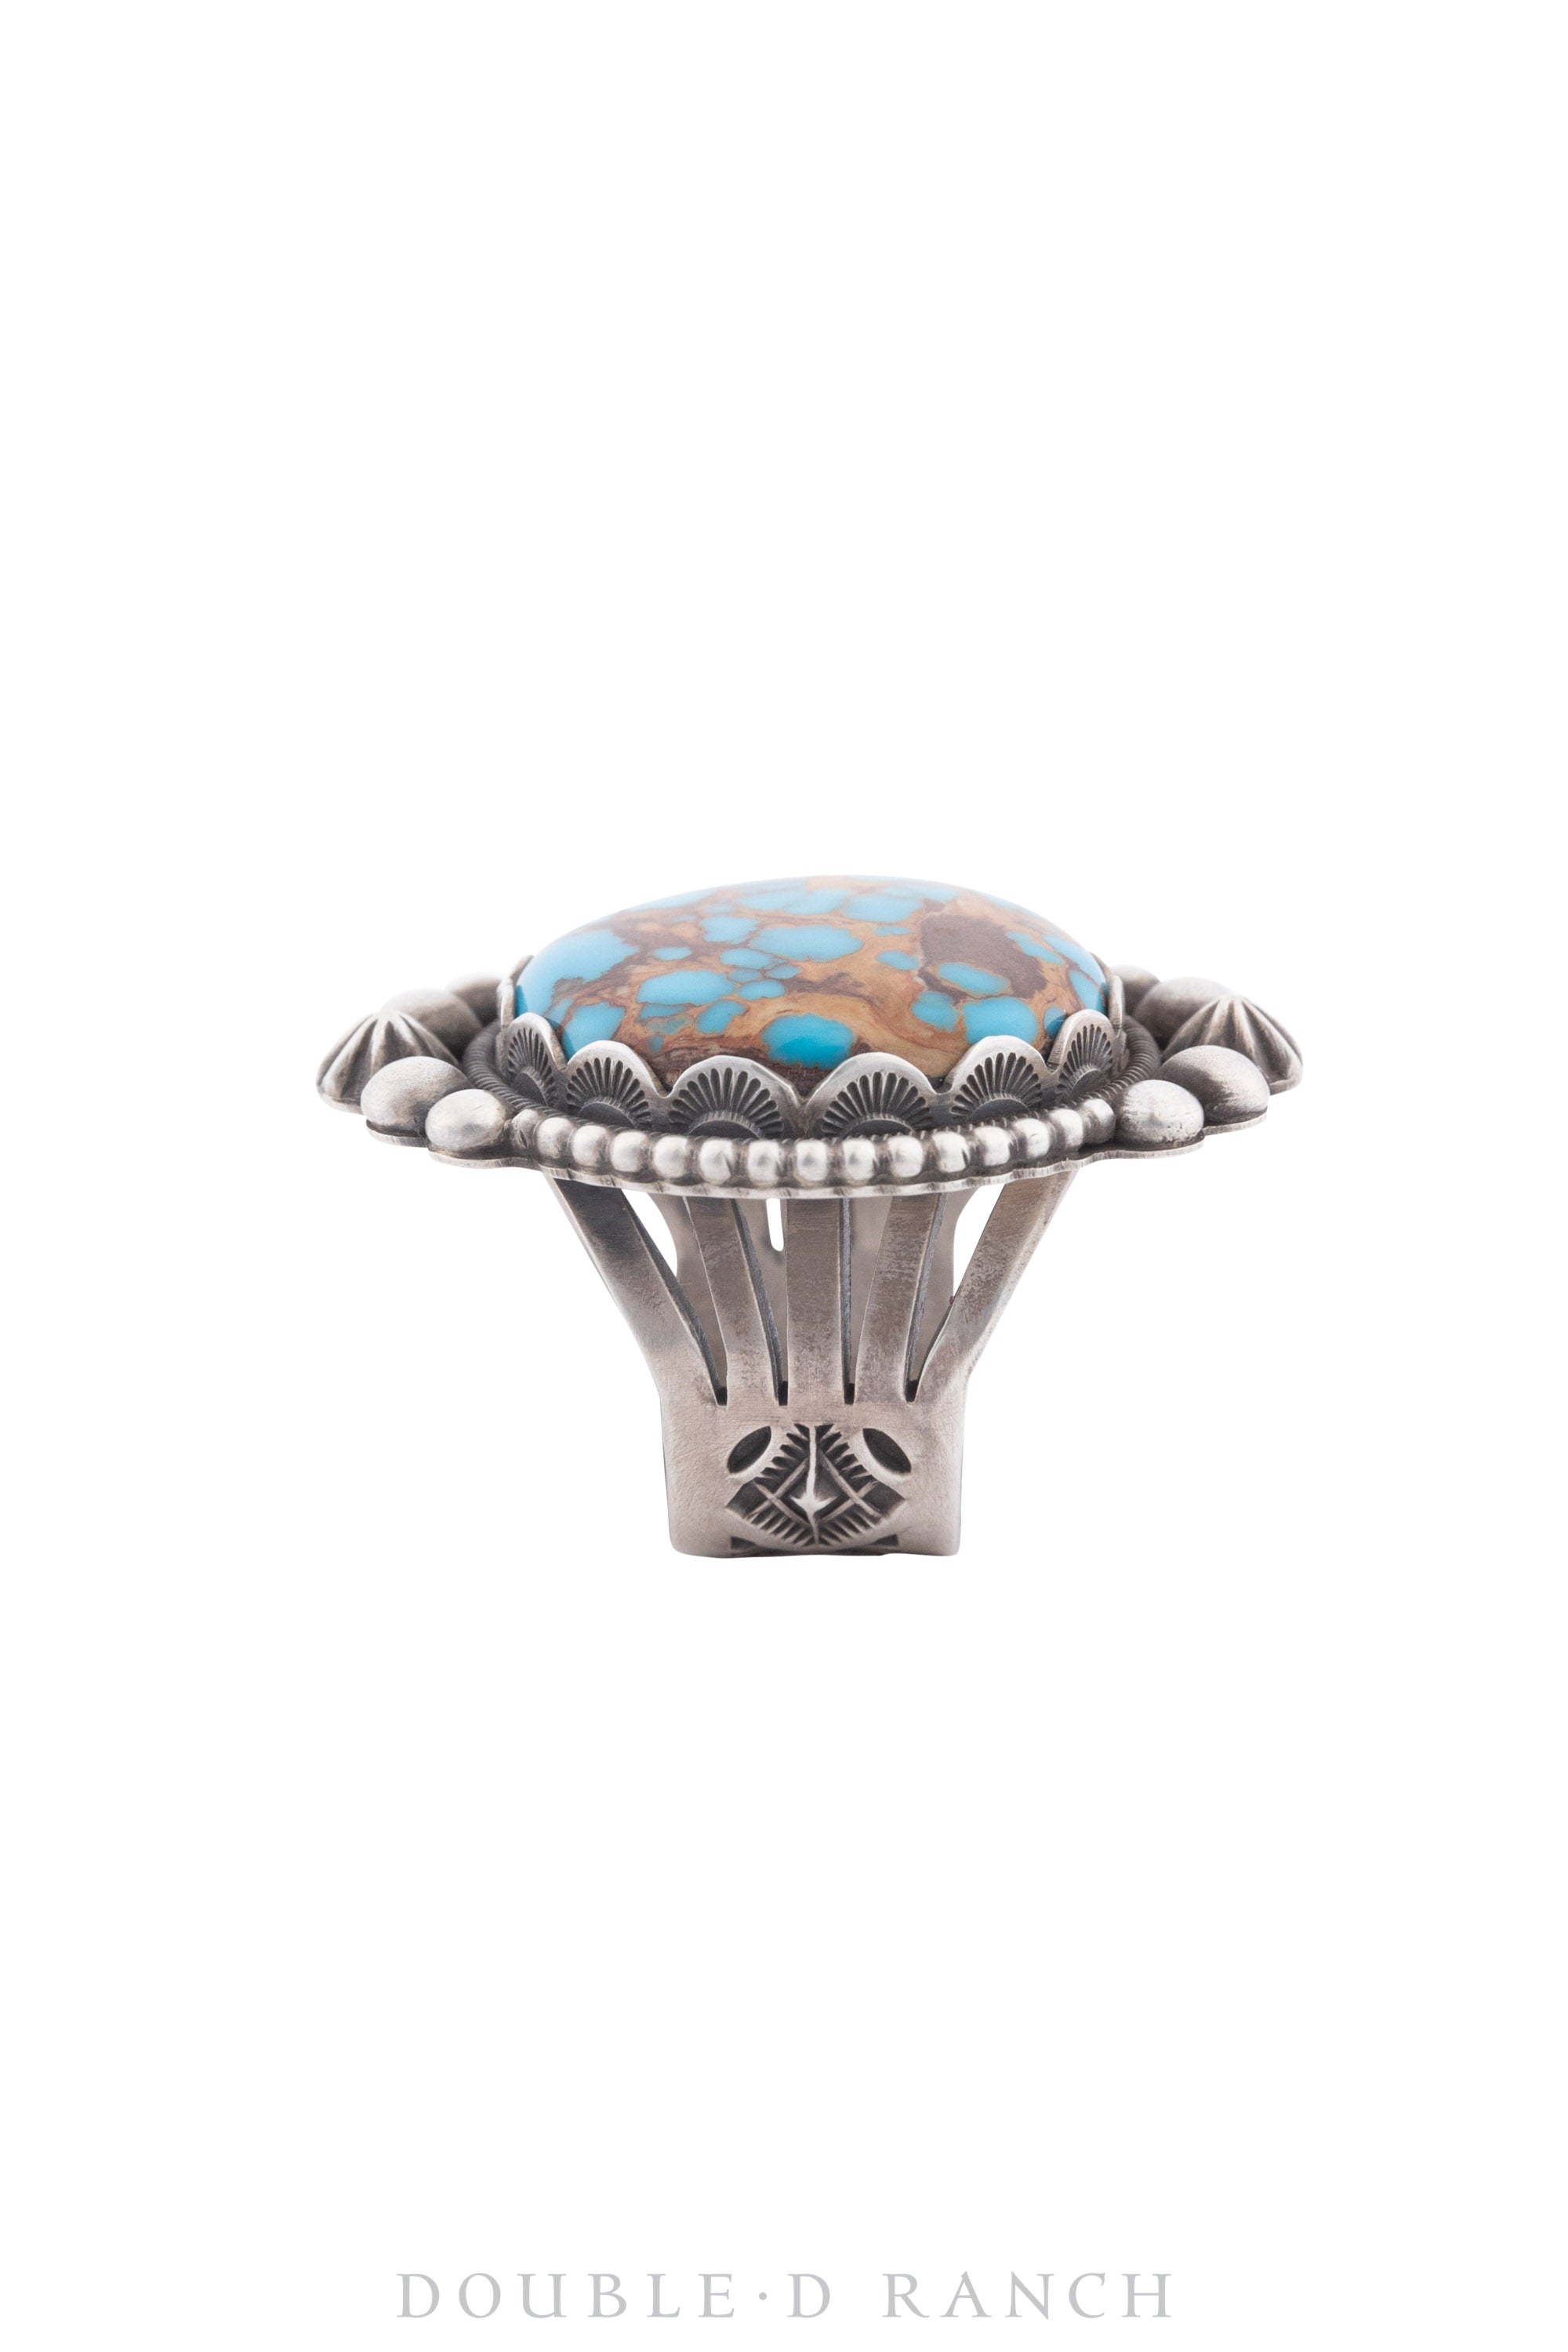 Ring, Natural Stone, Turquoise, Hallmark, Vintage, 1338